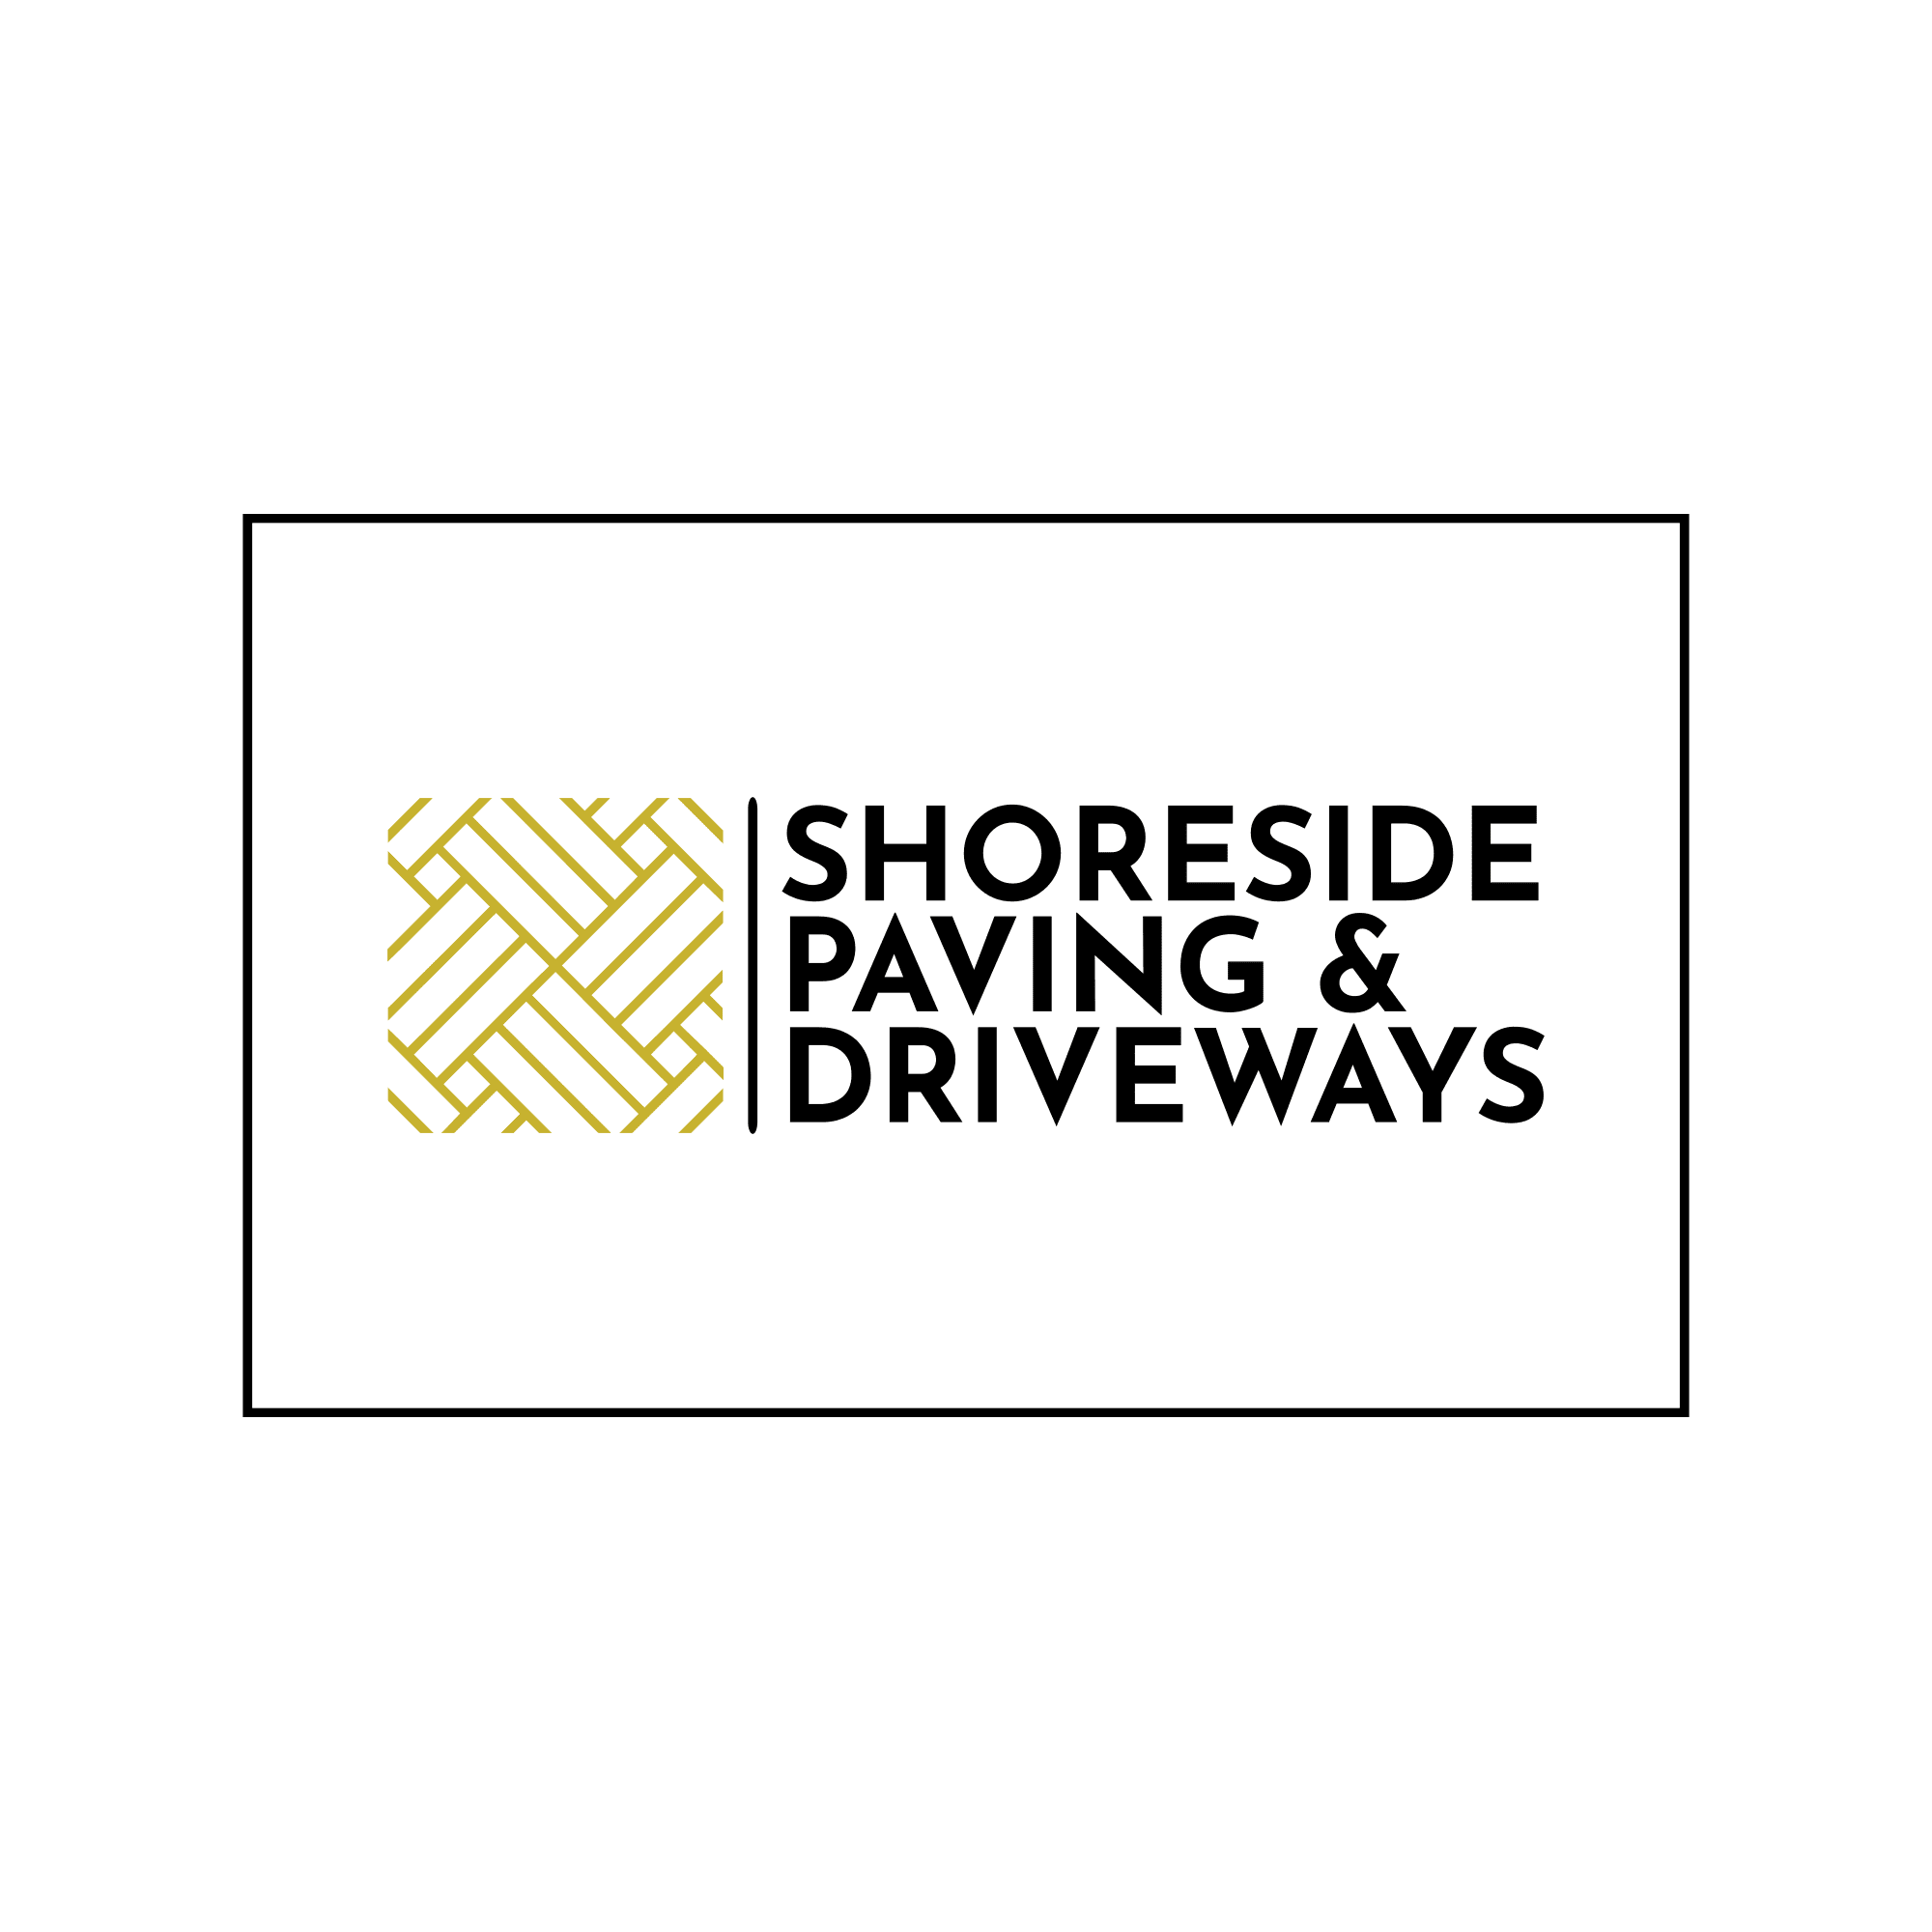 Shoreside Paving and Driveways - Southport, Merseyside PR8 3QS - 07938 484859 | ShowMeLocal.com